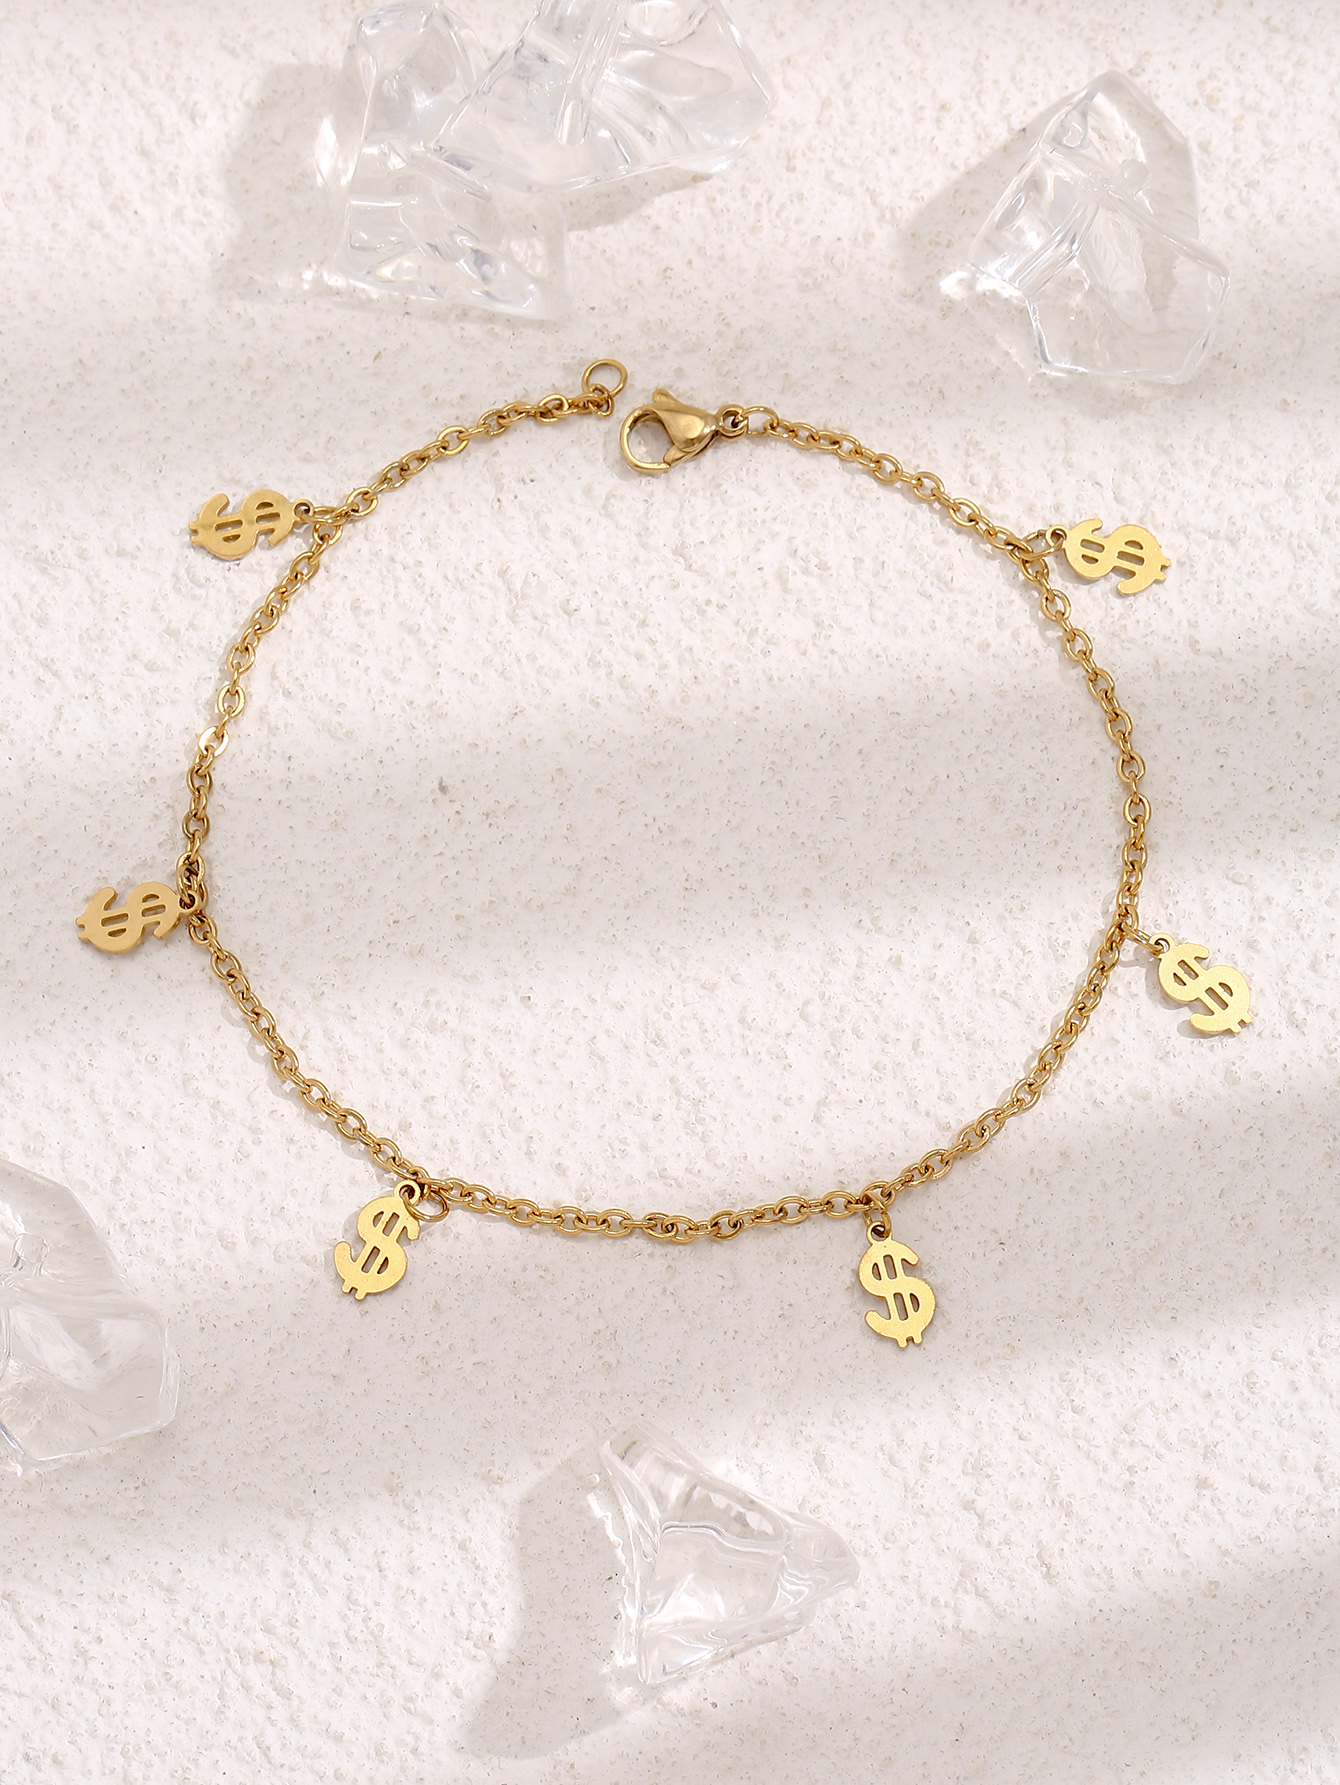 10 pcs - Golden Chain Anklet/Bracelet with Dollar Charms|GCJA001|UK SELLER